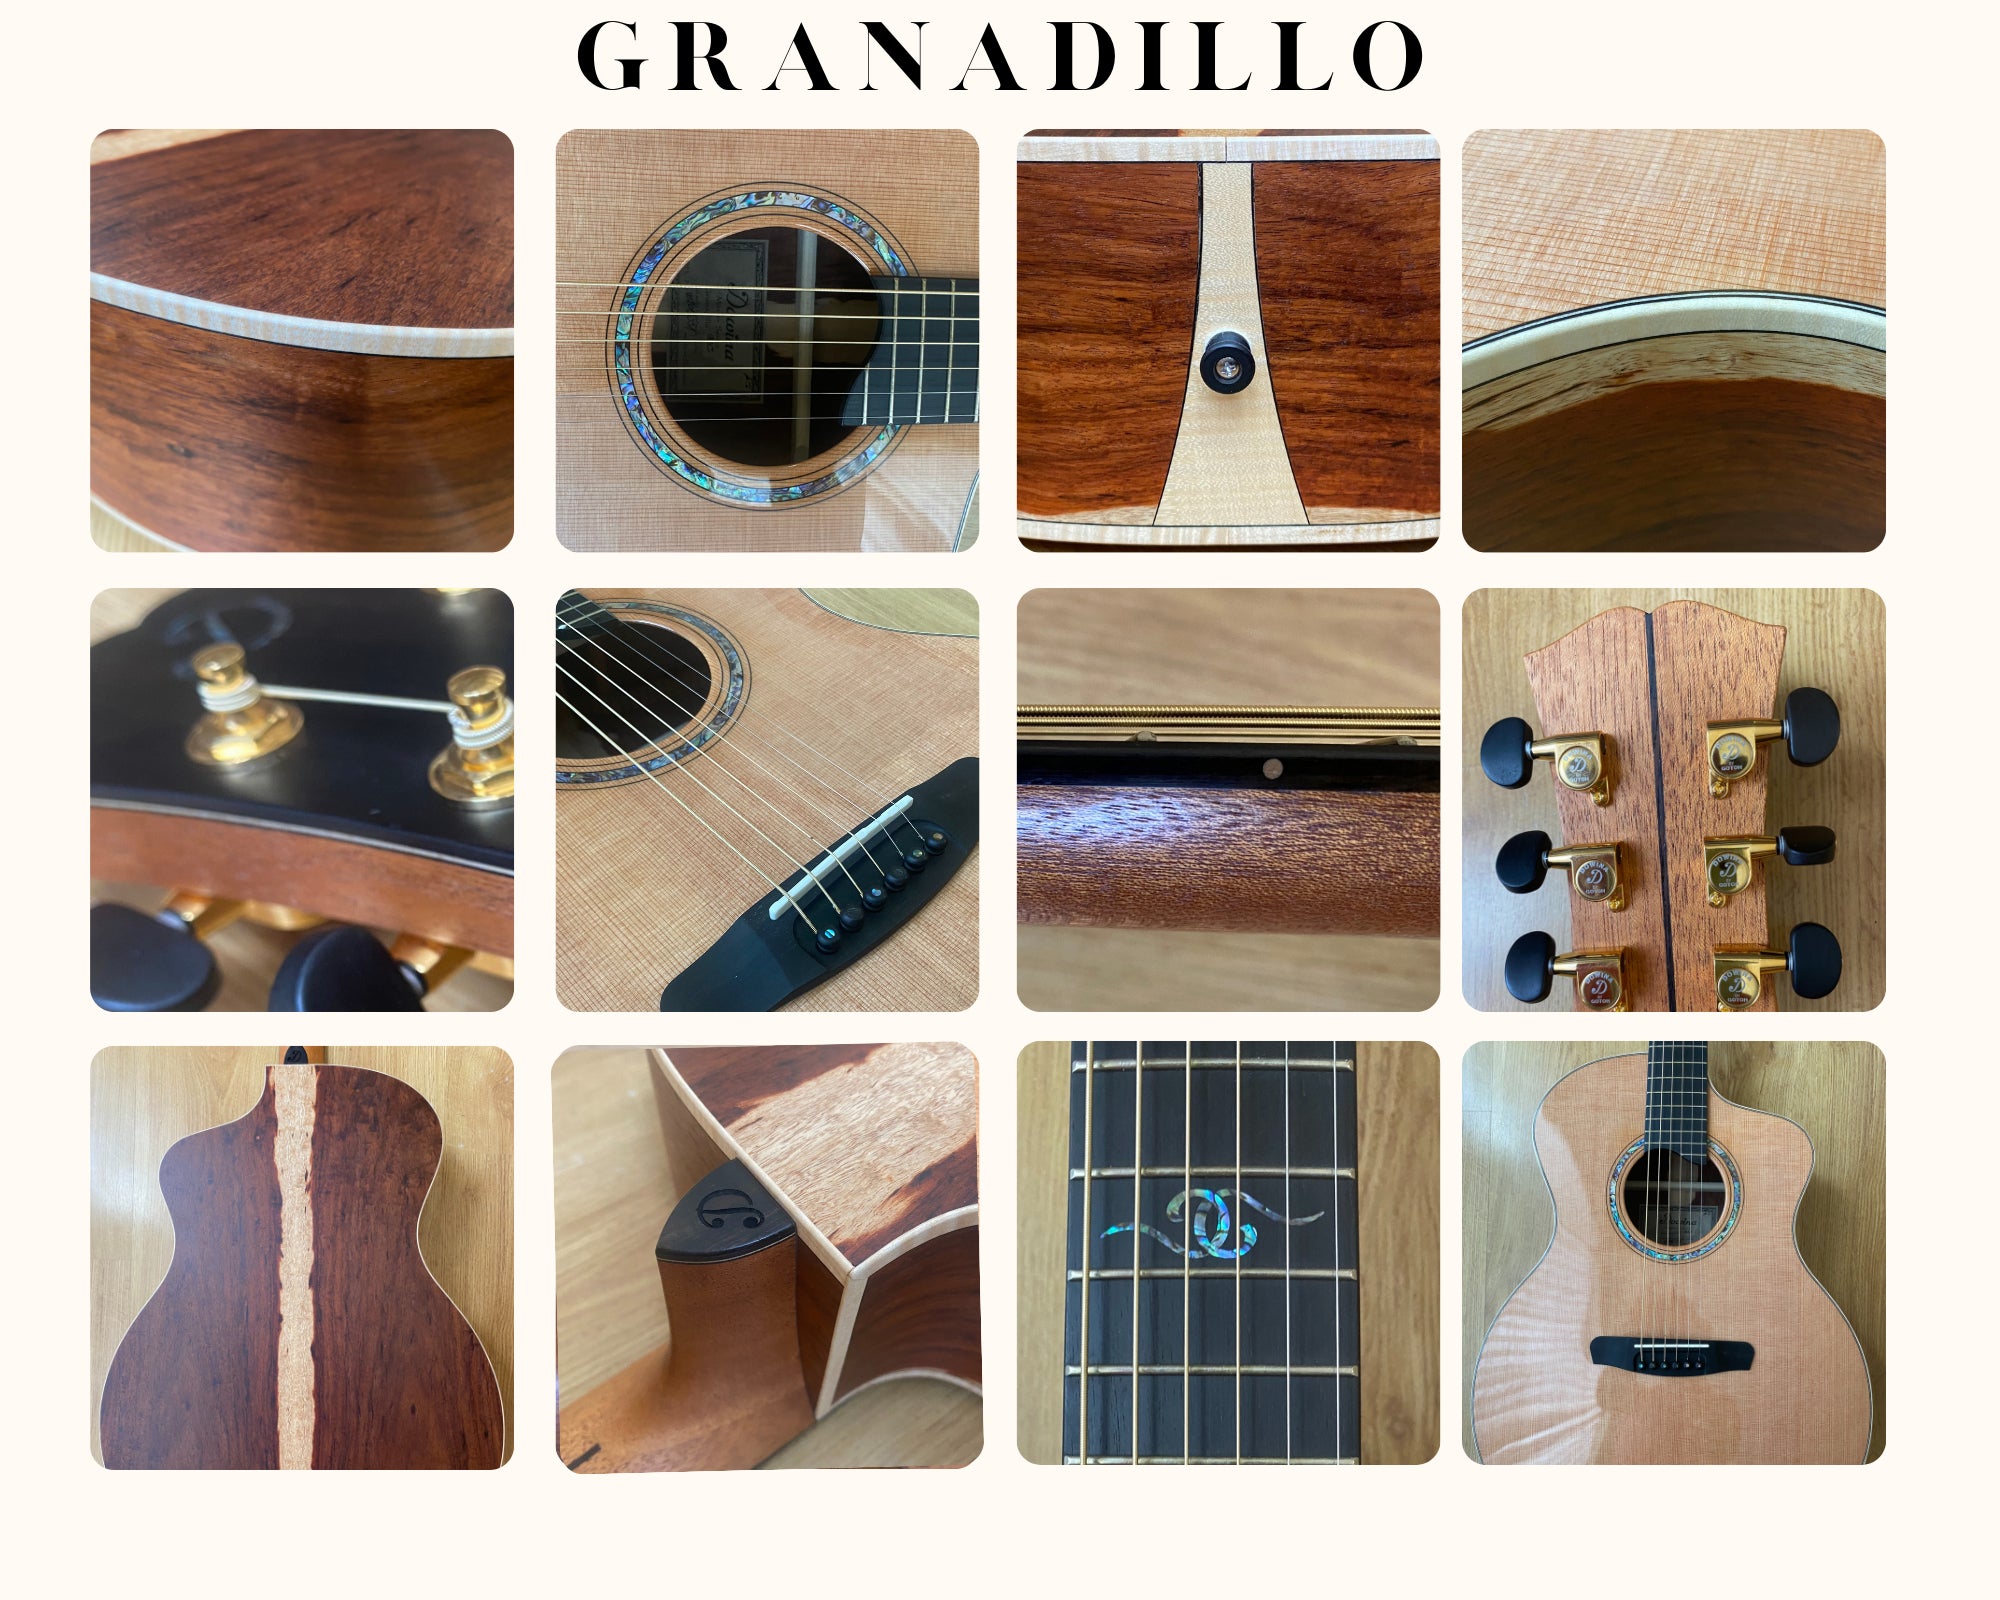 Dowina Granadillo GA, Acoustic Guitar for sale at Richards Guitars.